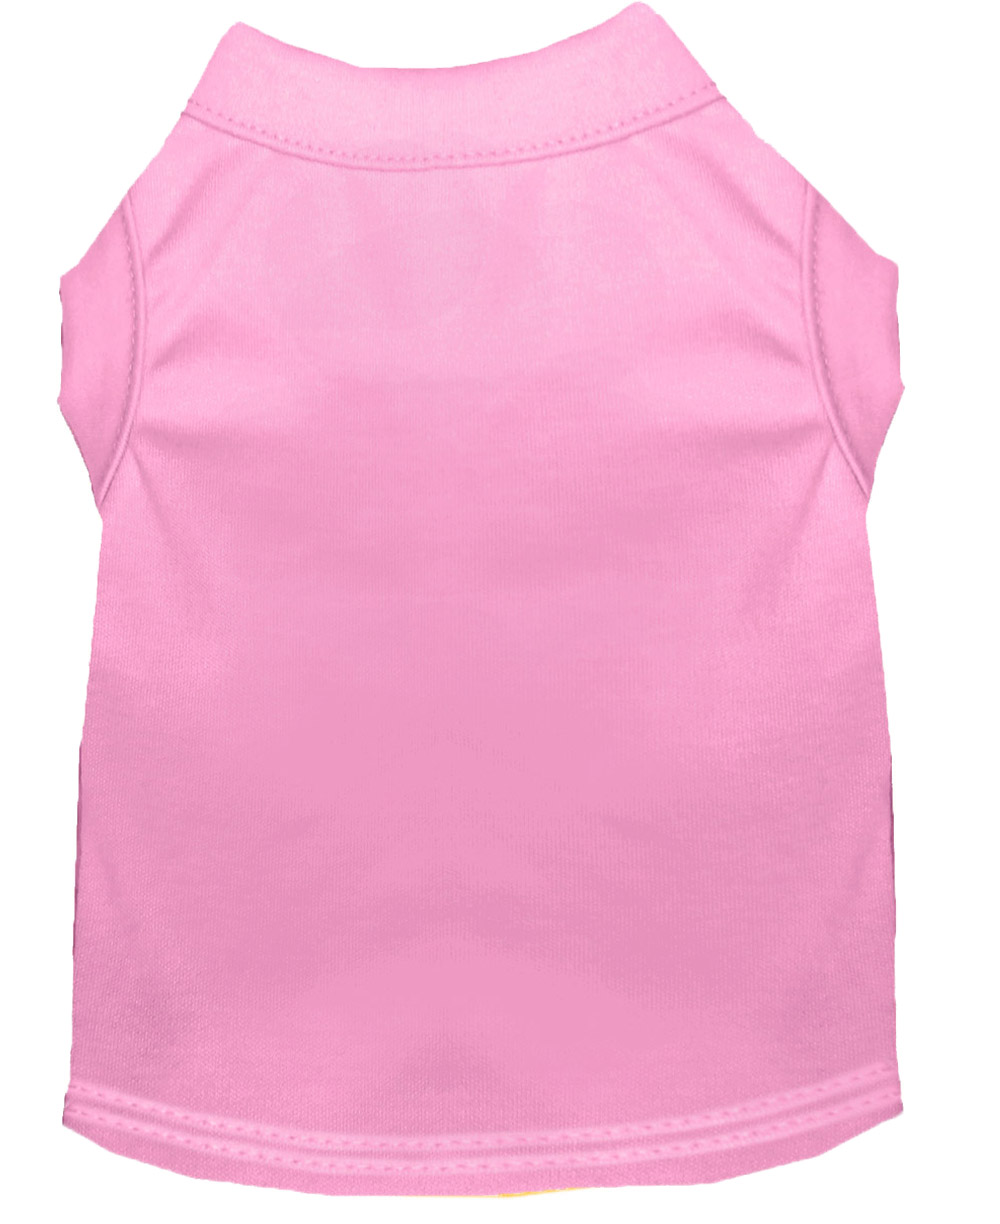 Plain Shirts Light Pink 5X